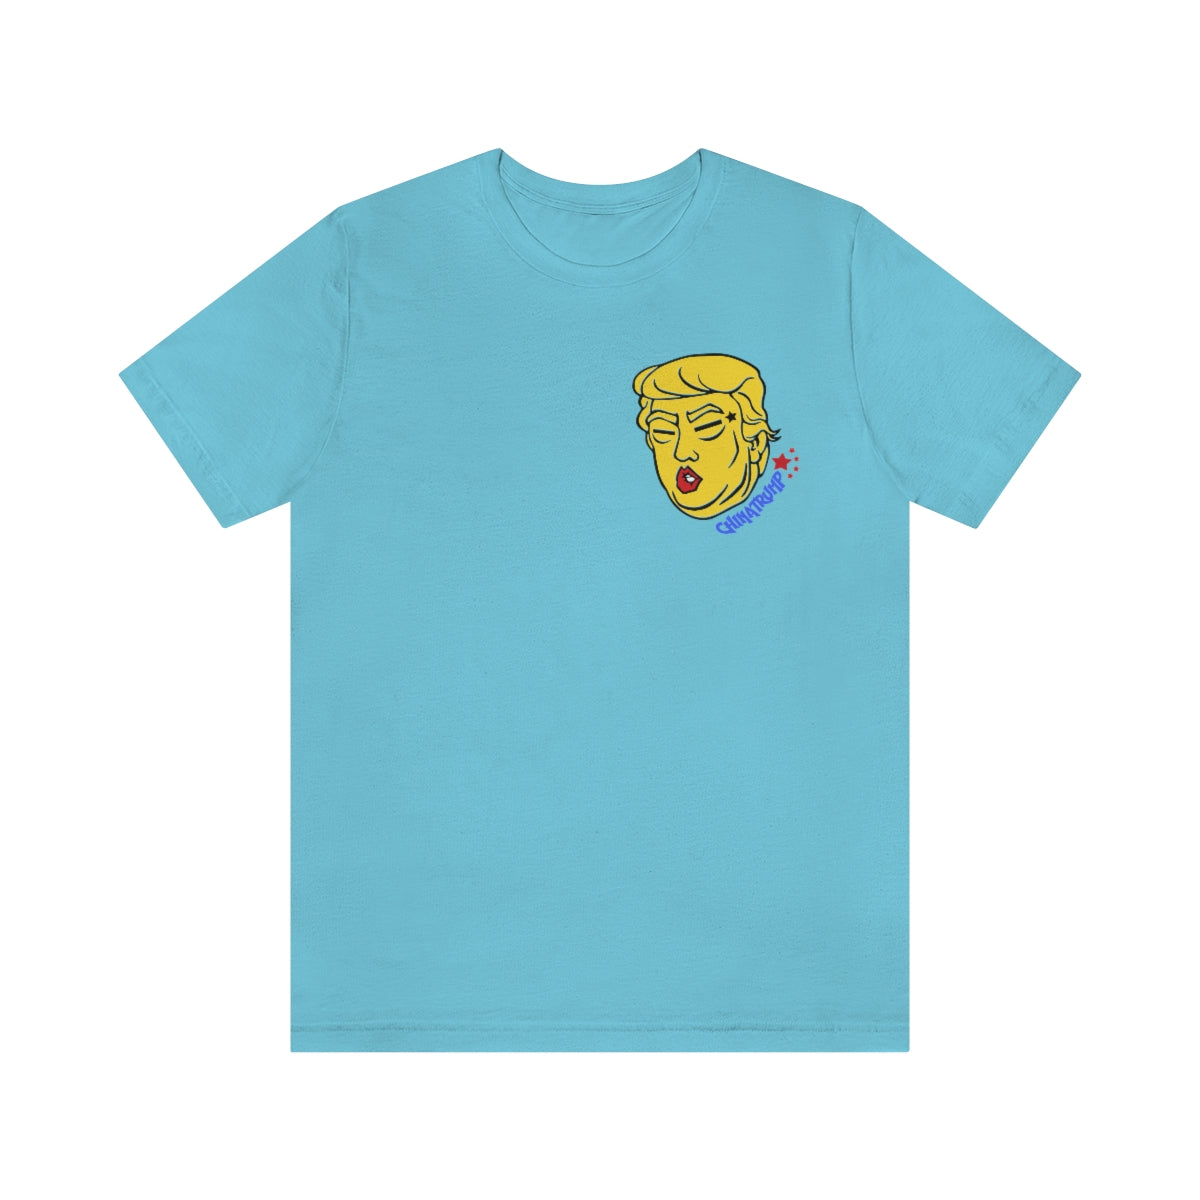 China-Trump - Trump, Chinese Dictator | Meme unisex T-shirt